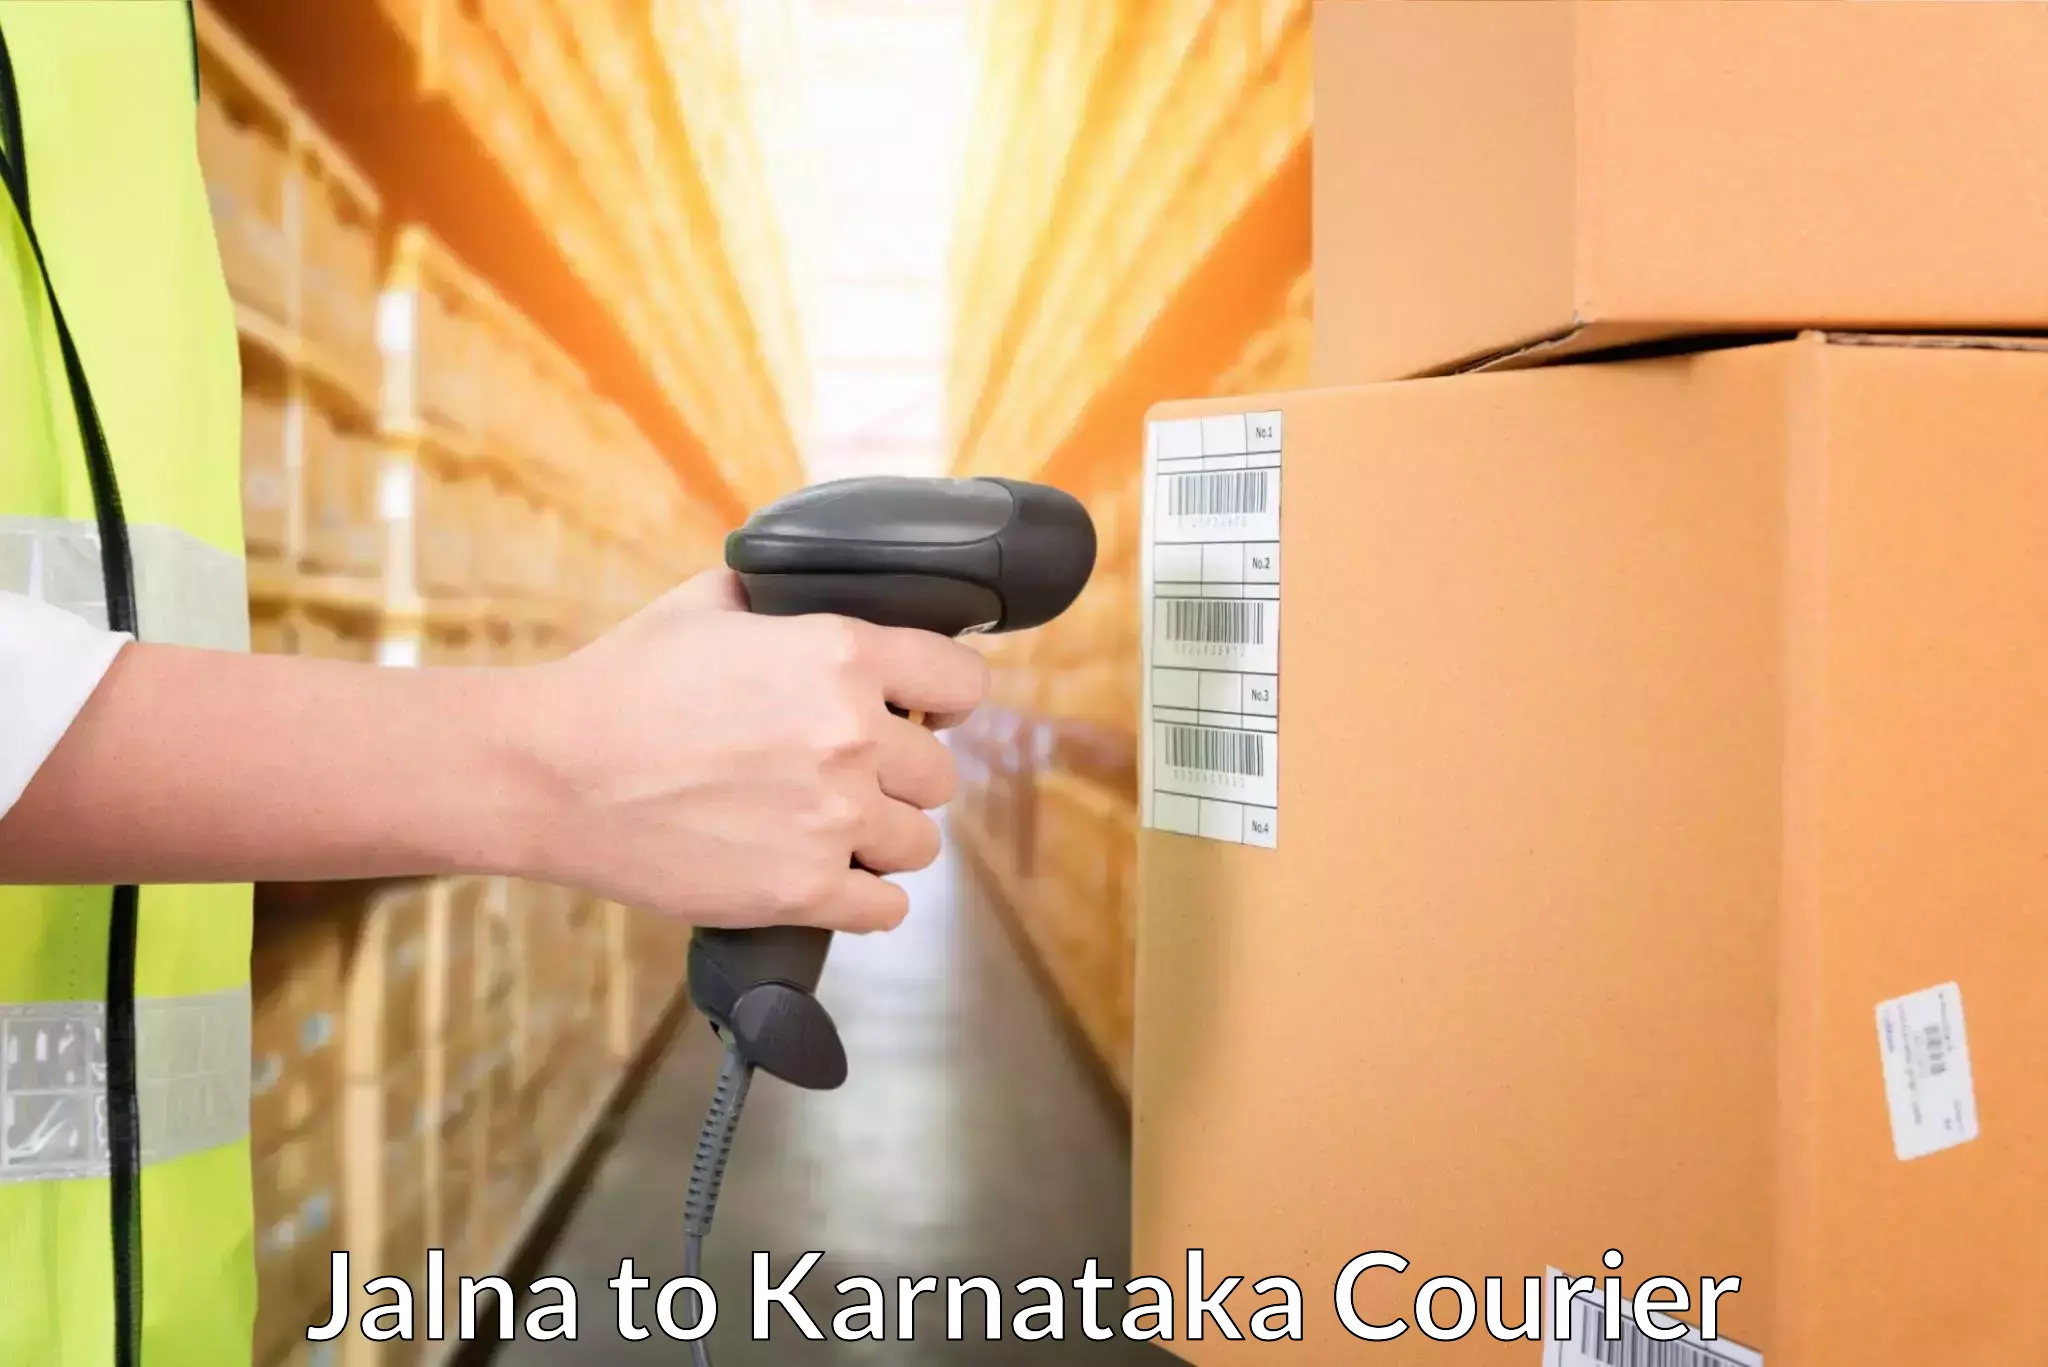 User-friendly delivery service Jalna to Karnataka